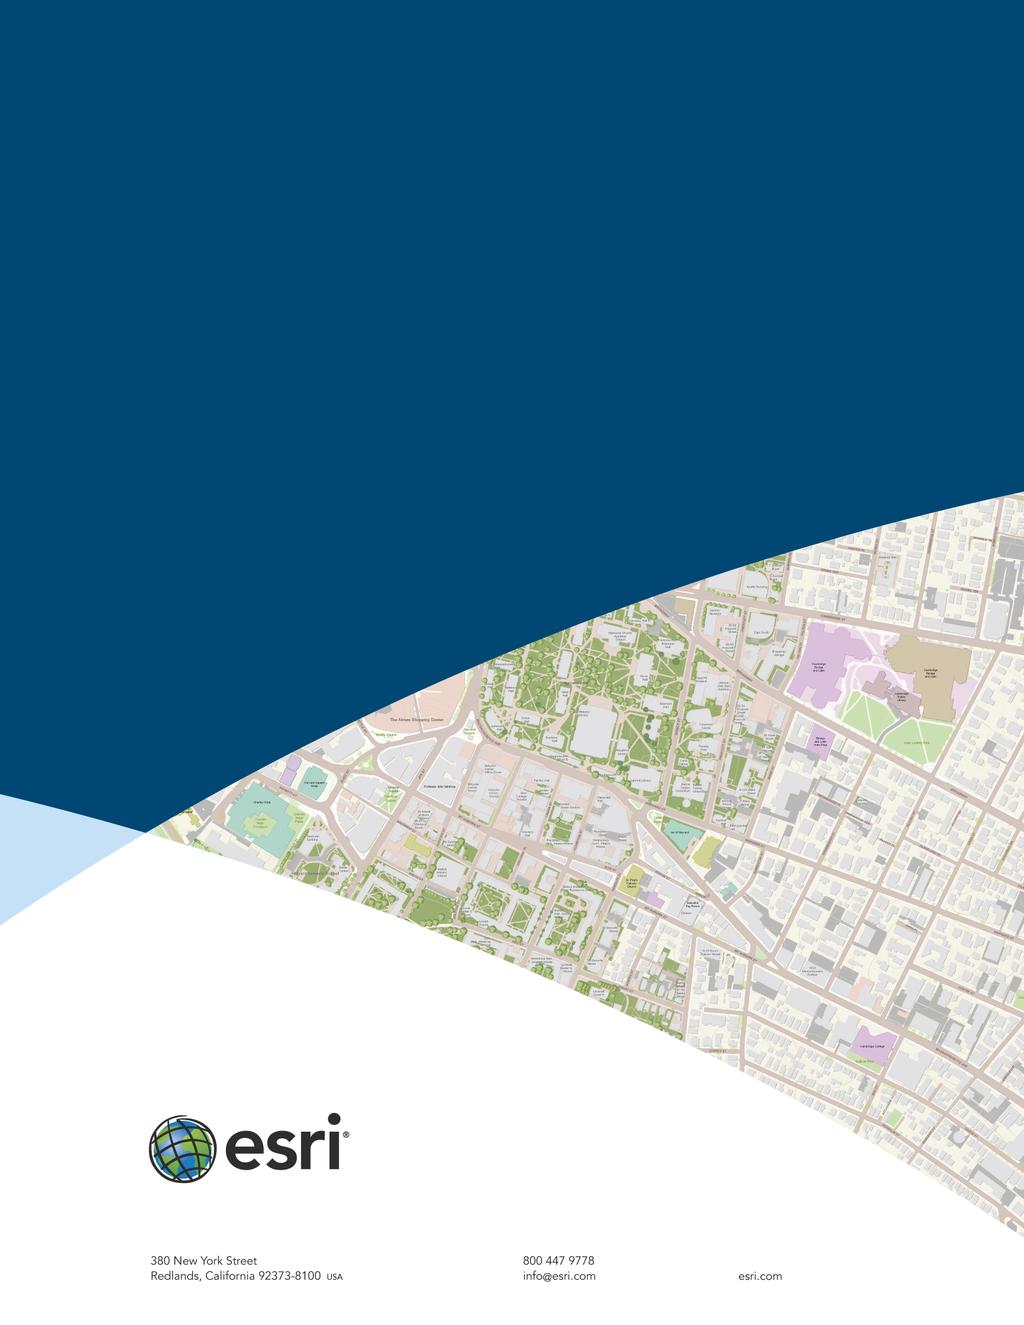 Esri Support for Geospatial Standards: Open Geospatial Consortium (OGC) International